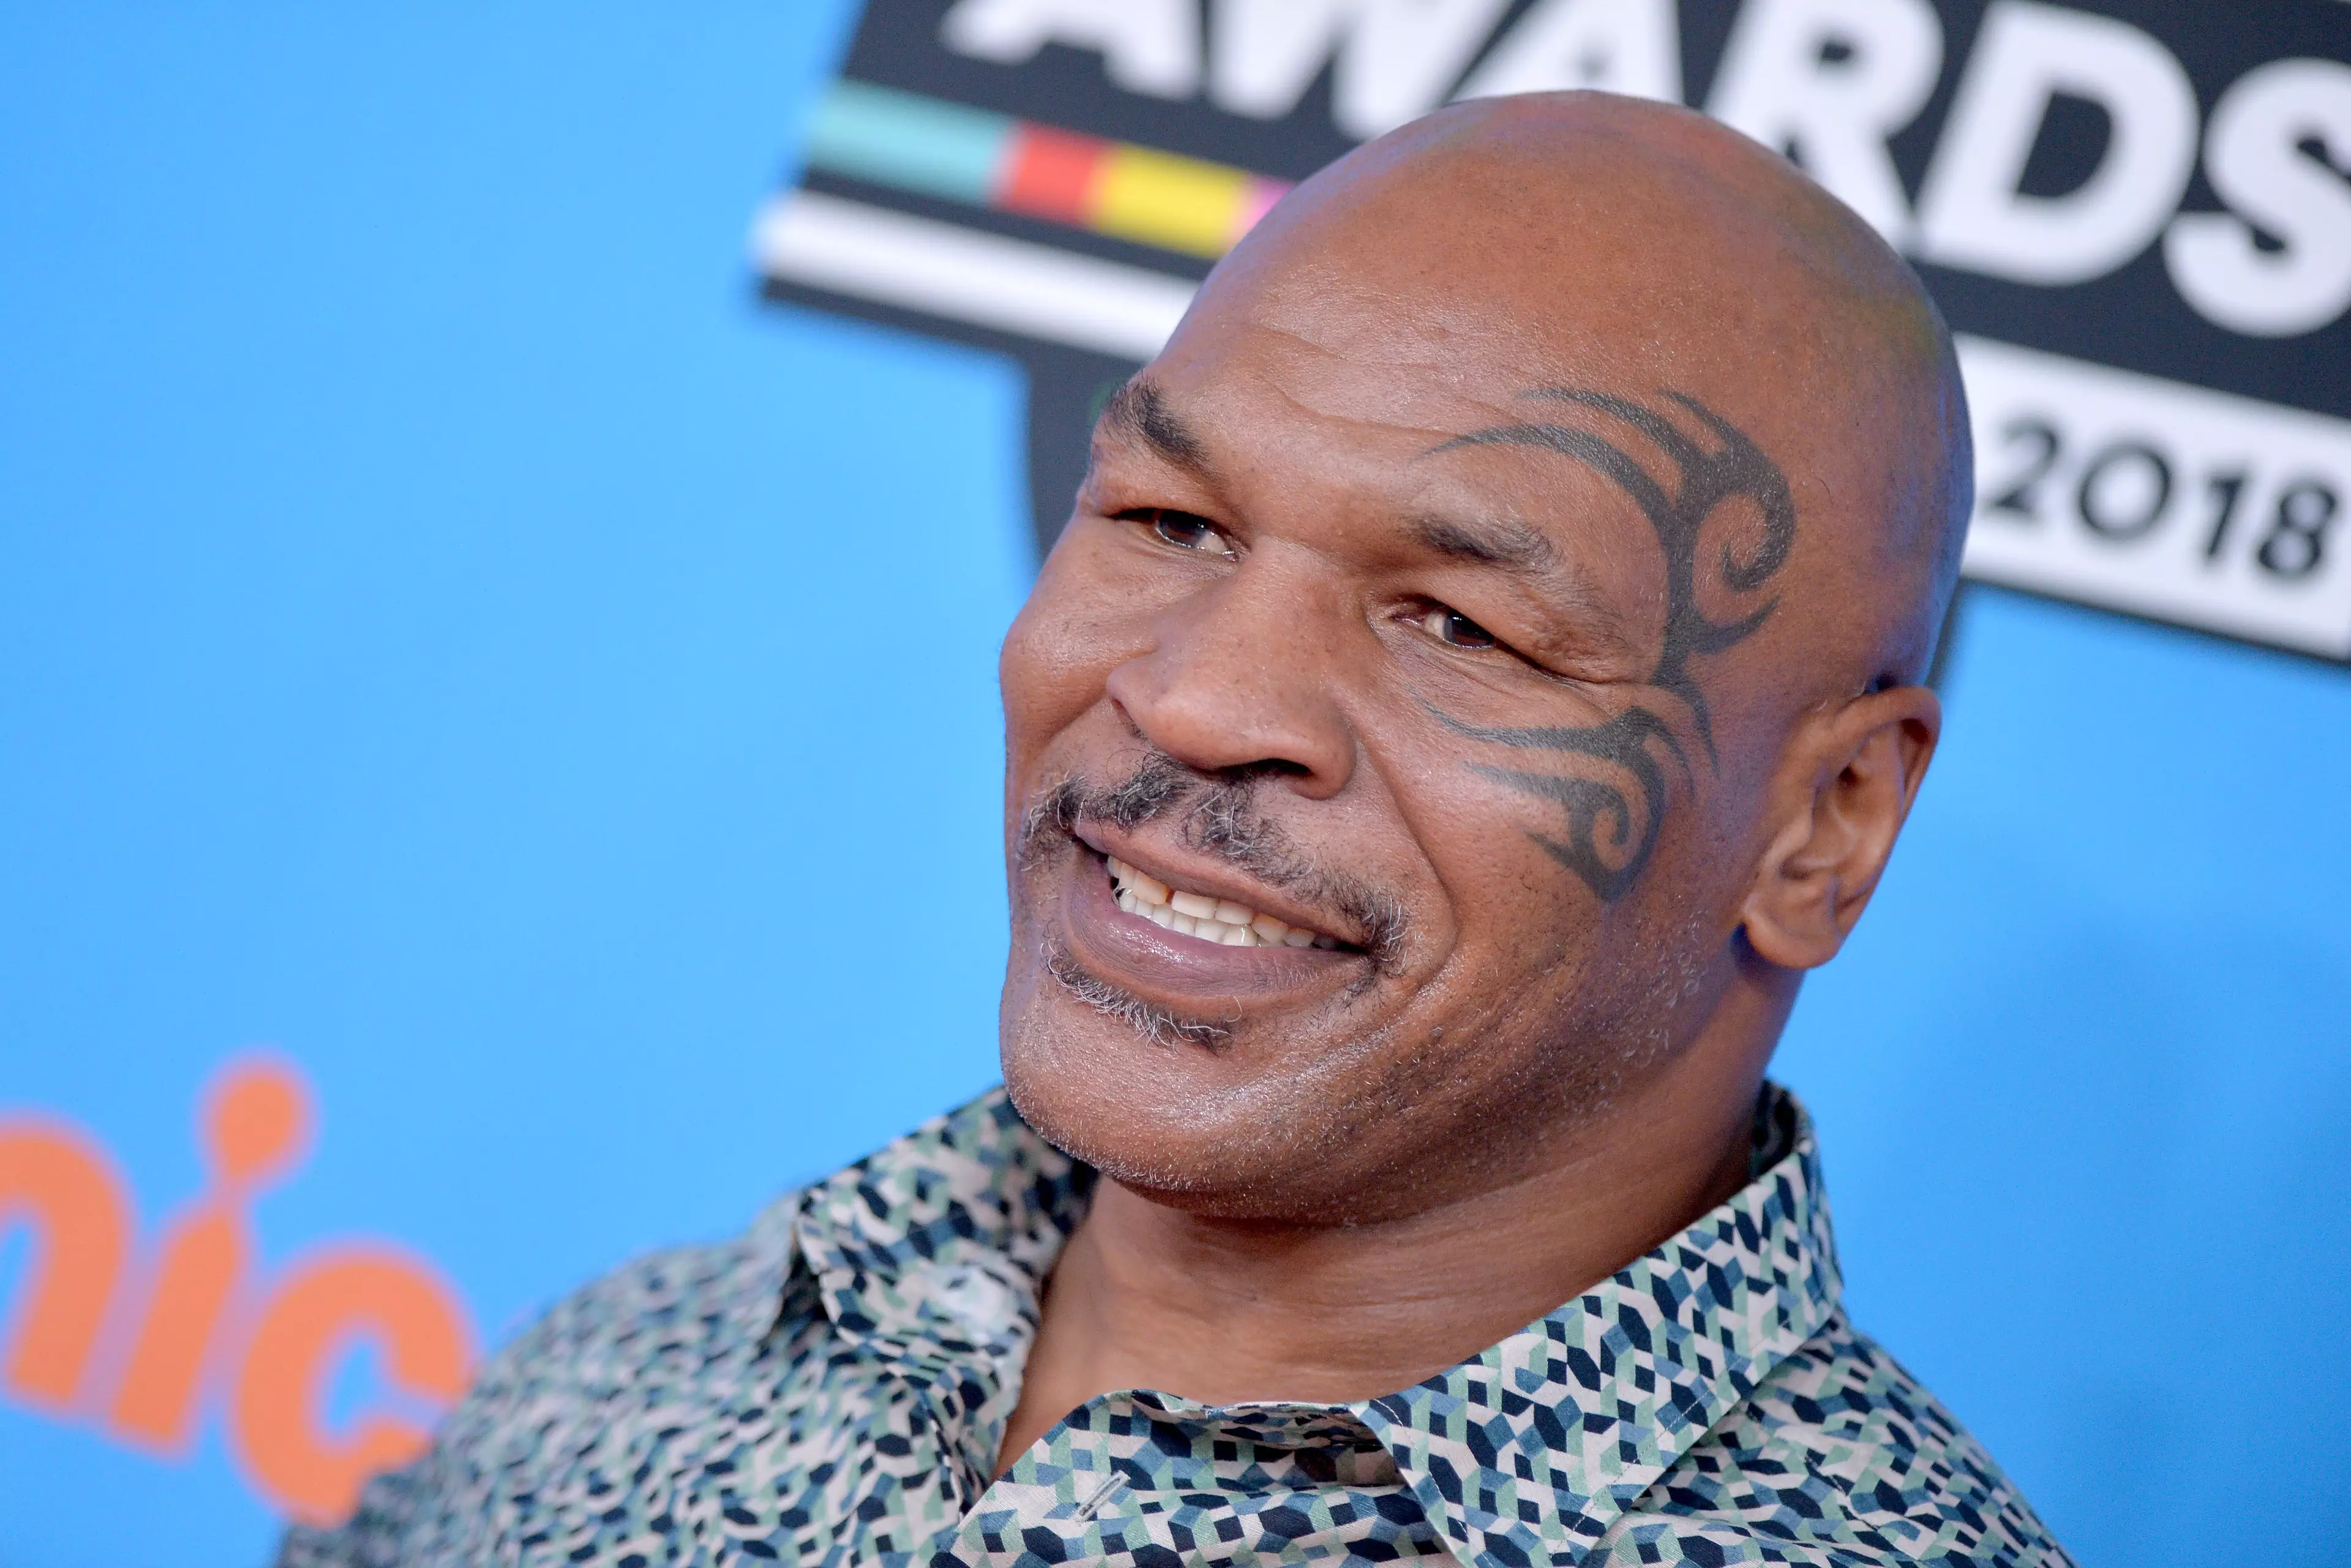 Mike Tyson in 2018.